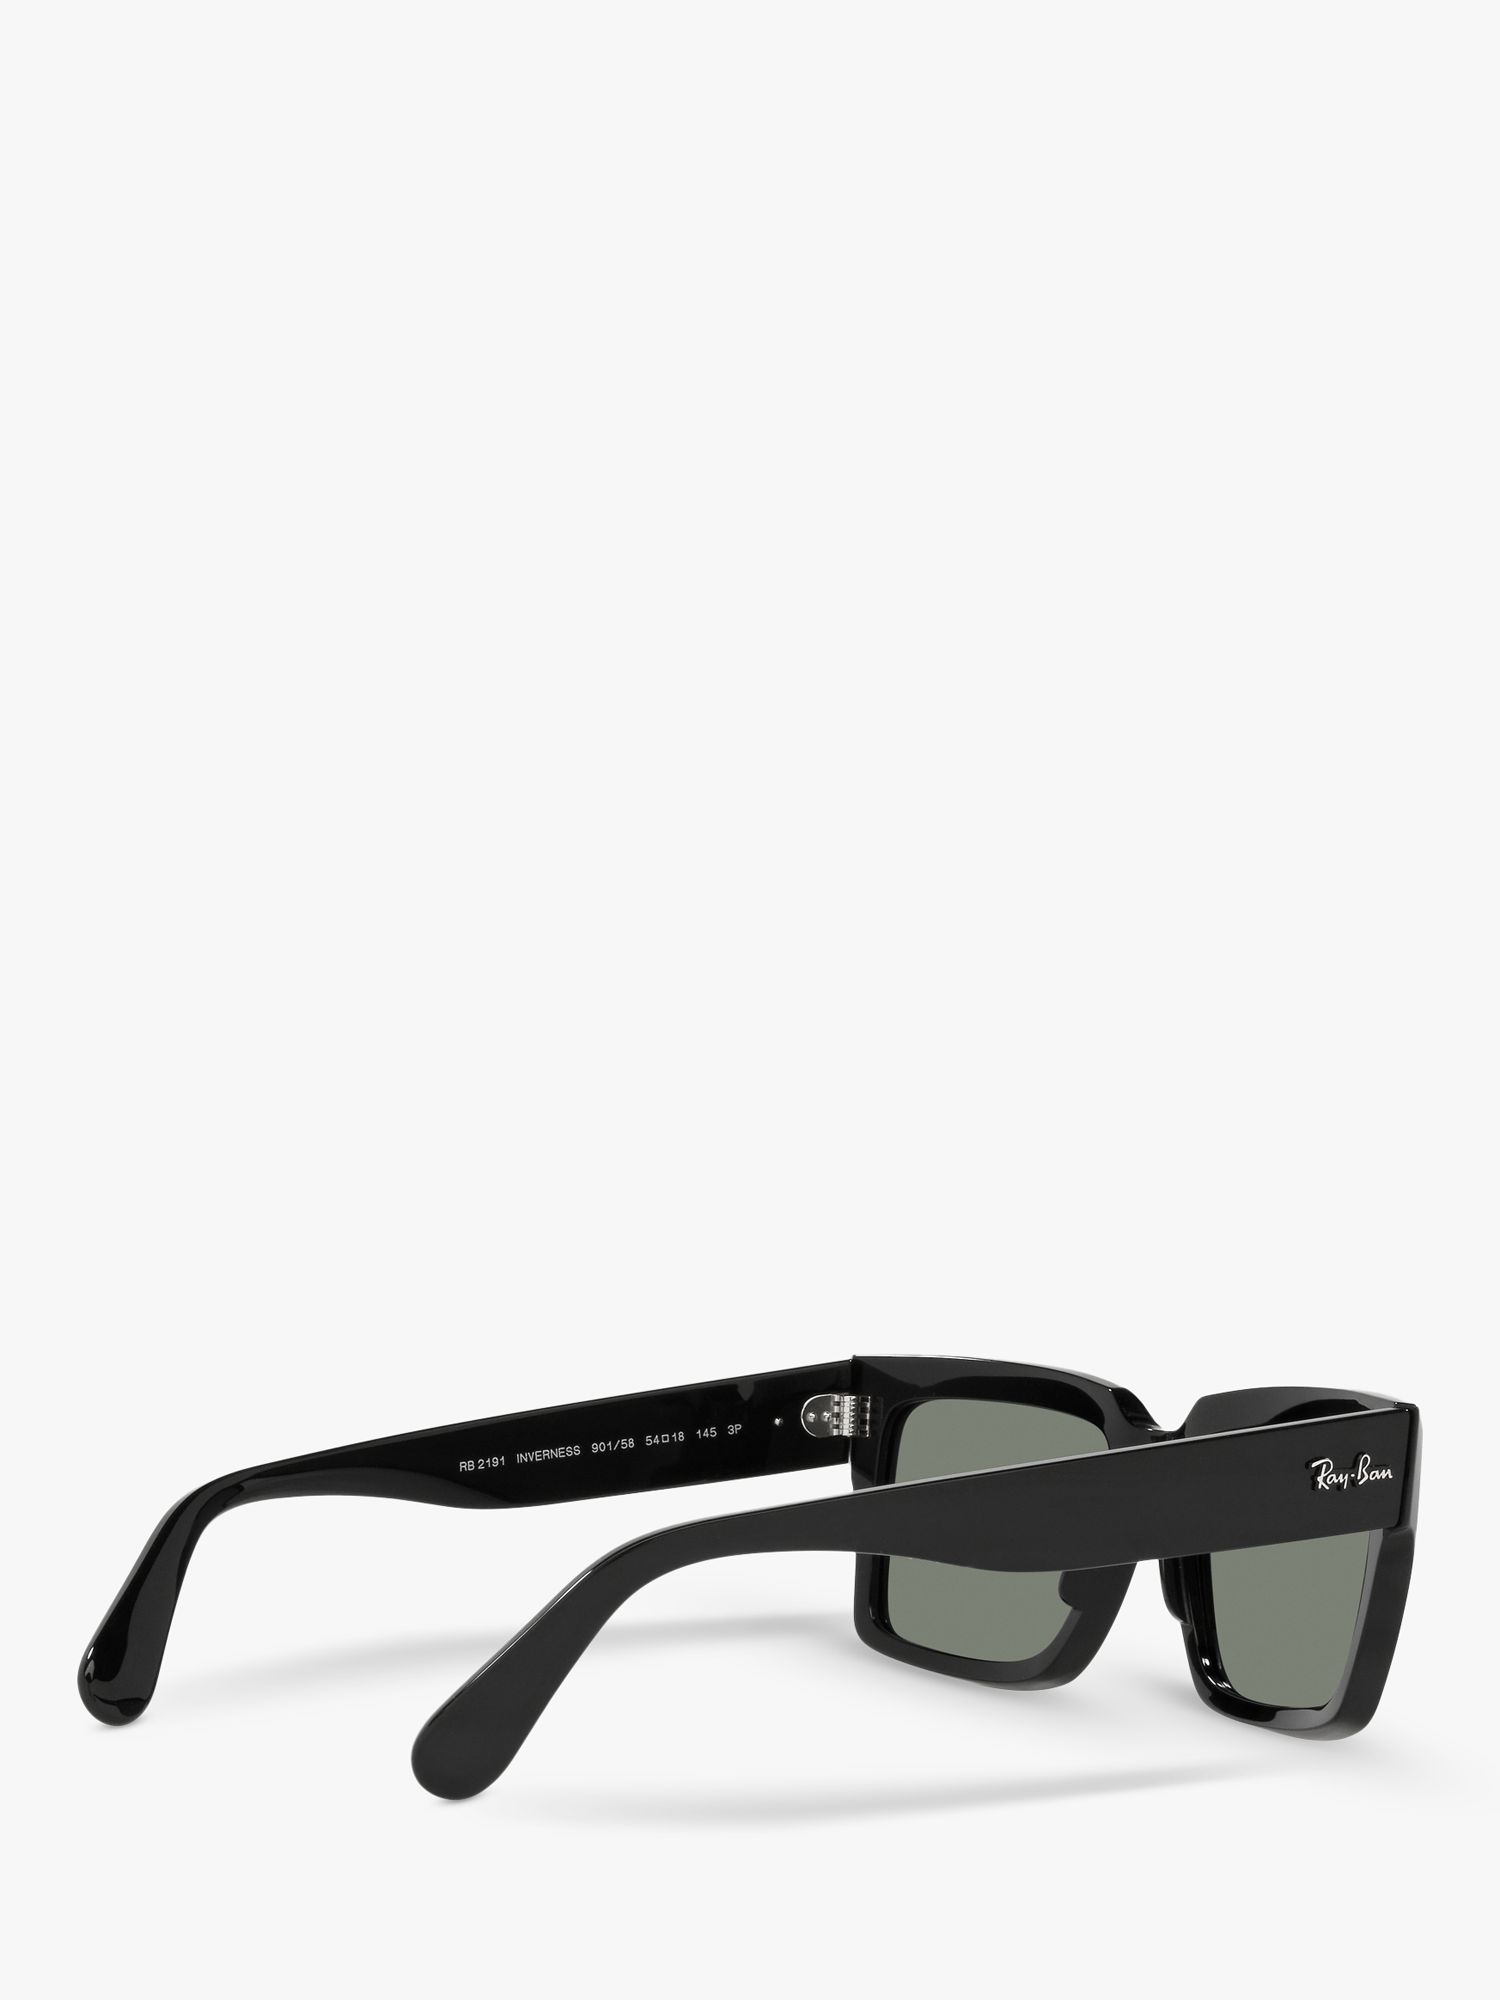 Ray-Ban RB2191 Unisex Polarised Pillow Shape Sunglasses, Black